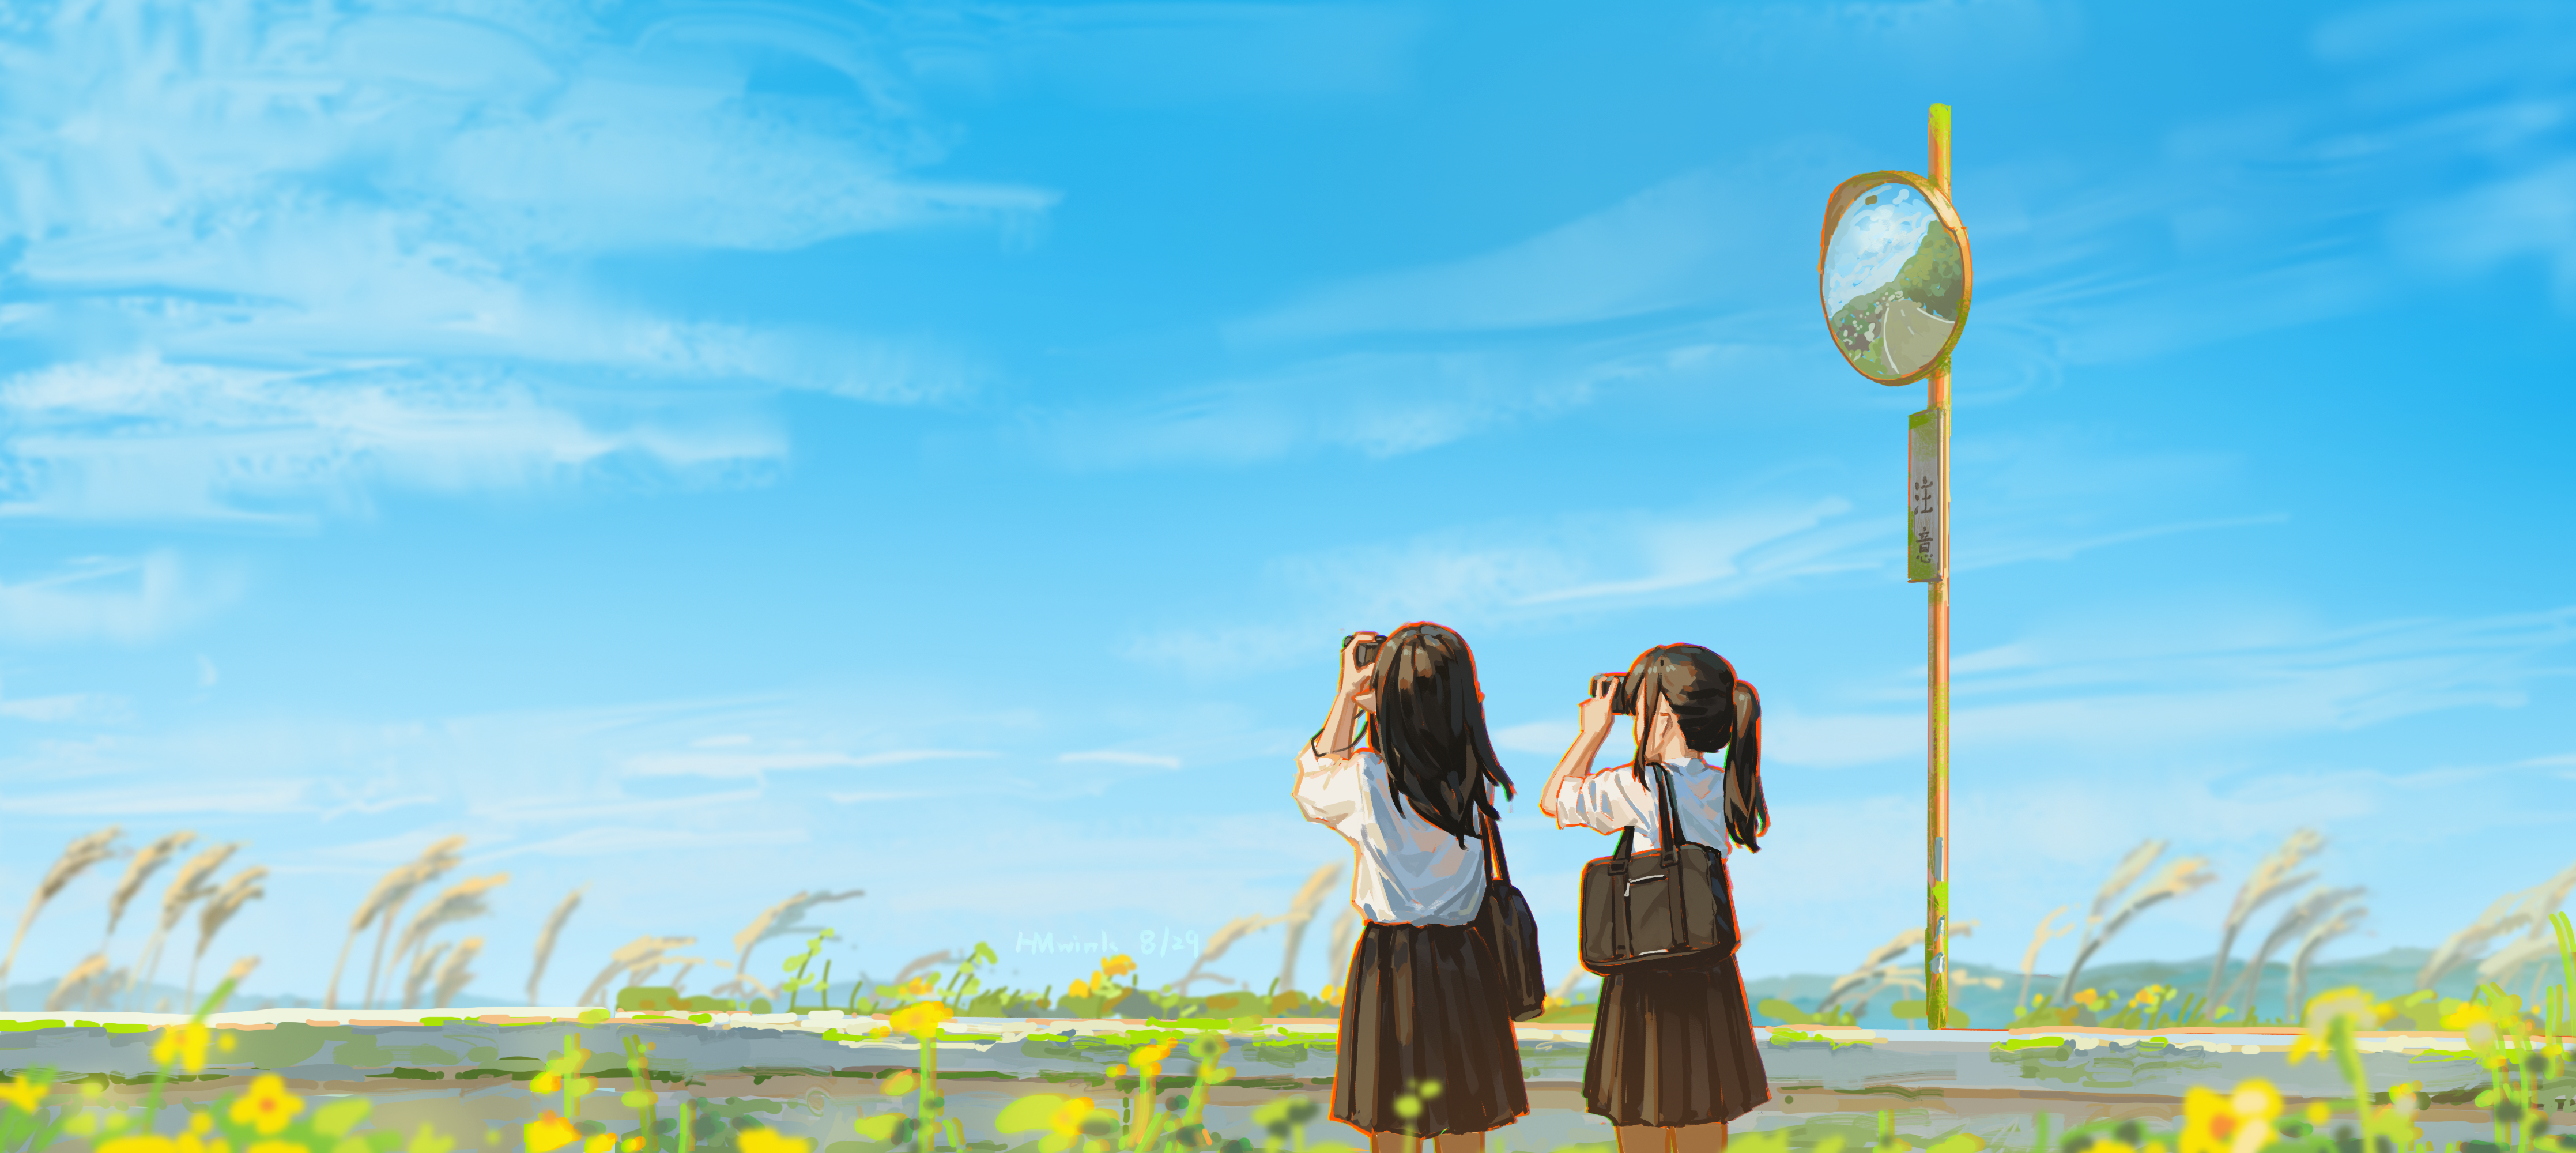 Anime 4469x2000 Hua Ming wink original characters sky school uniform anime girls schoolgirl camera